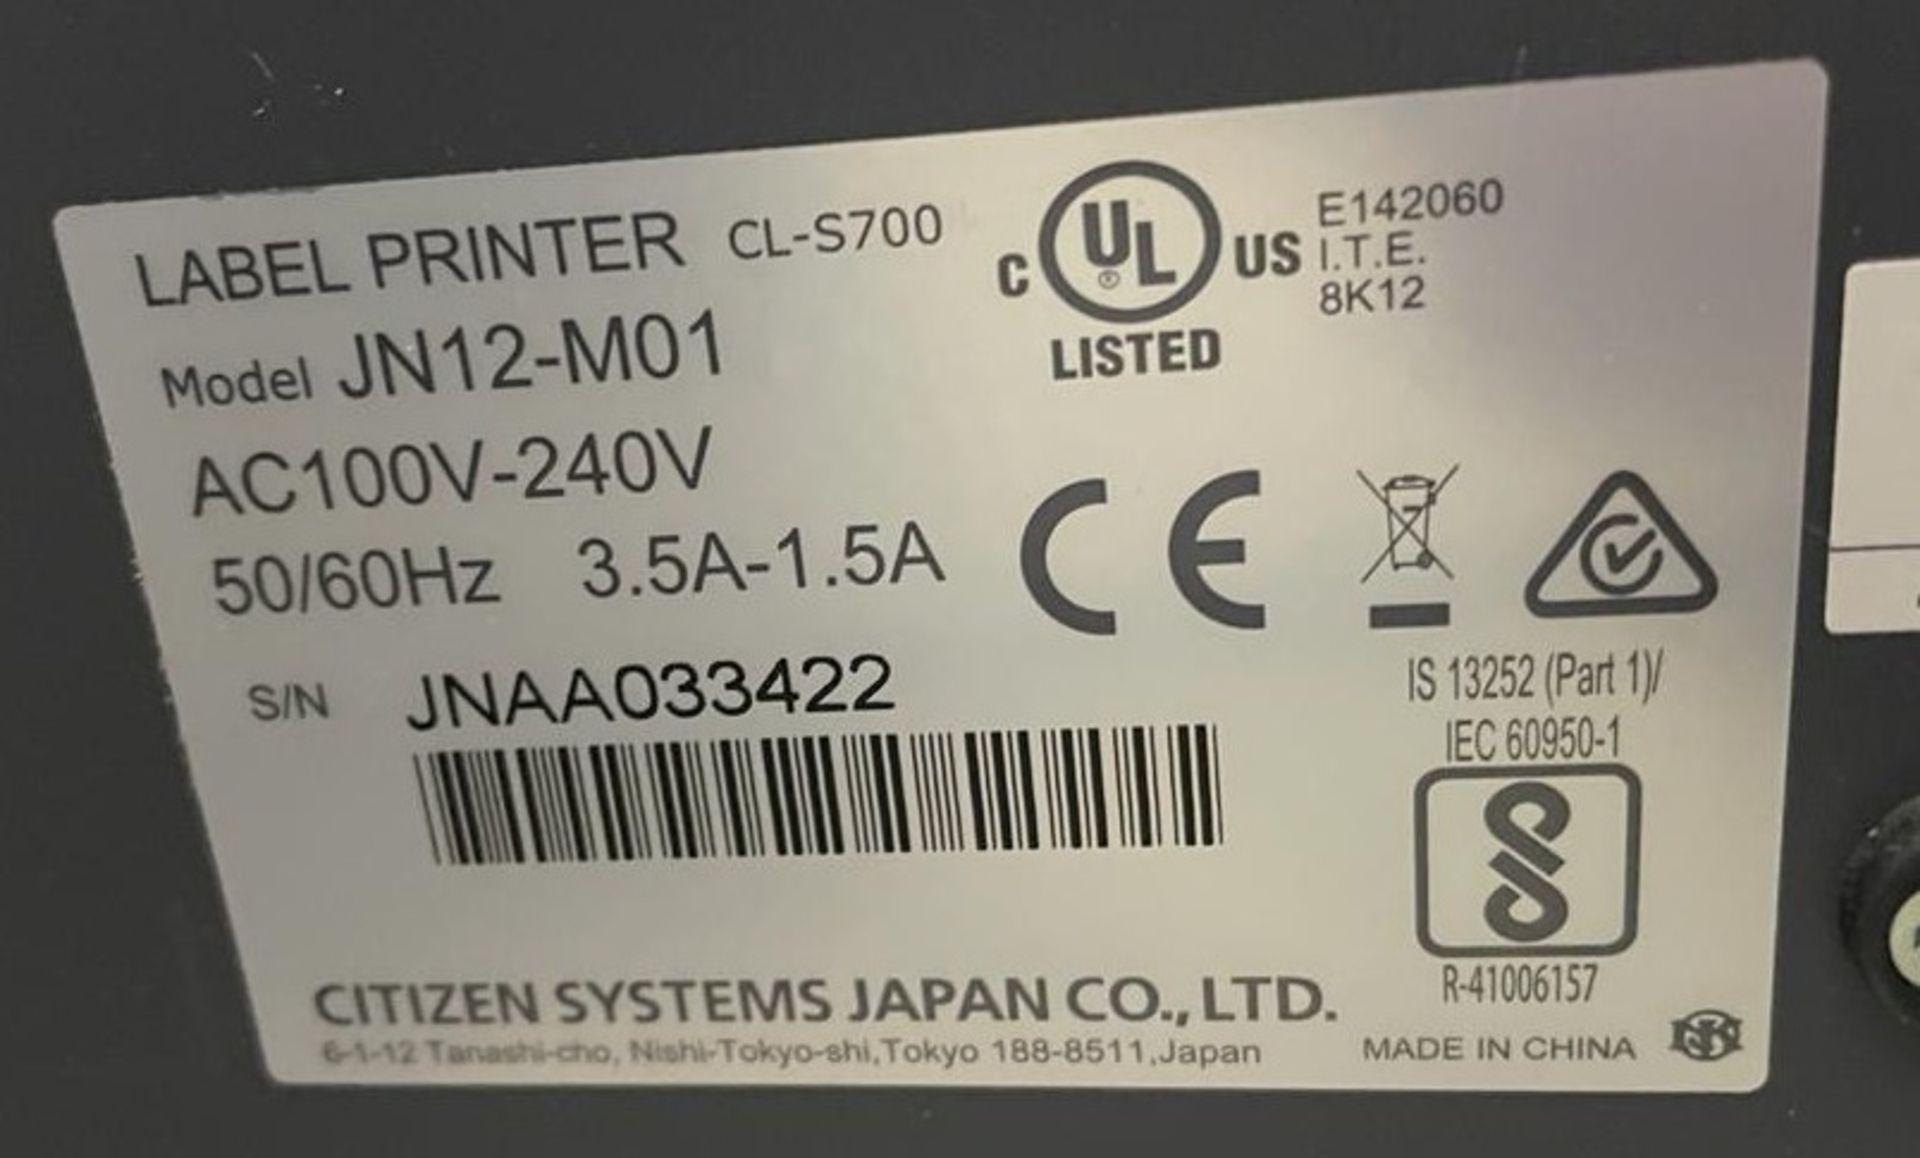 Citizen CLS 700 JN12-MOP Label Printer, Serial Number JNAA033422 & Quantity Labels; Dell OptiPlex - Image 2 of 3